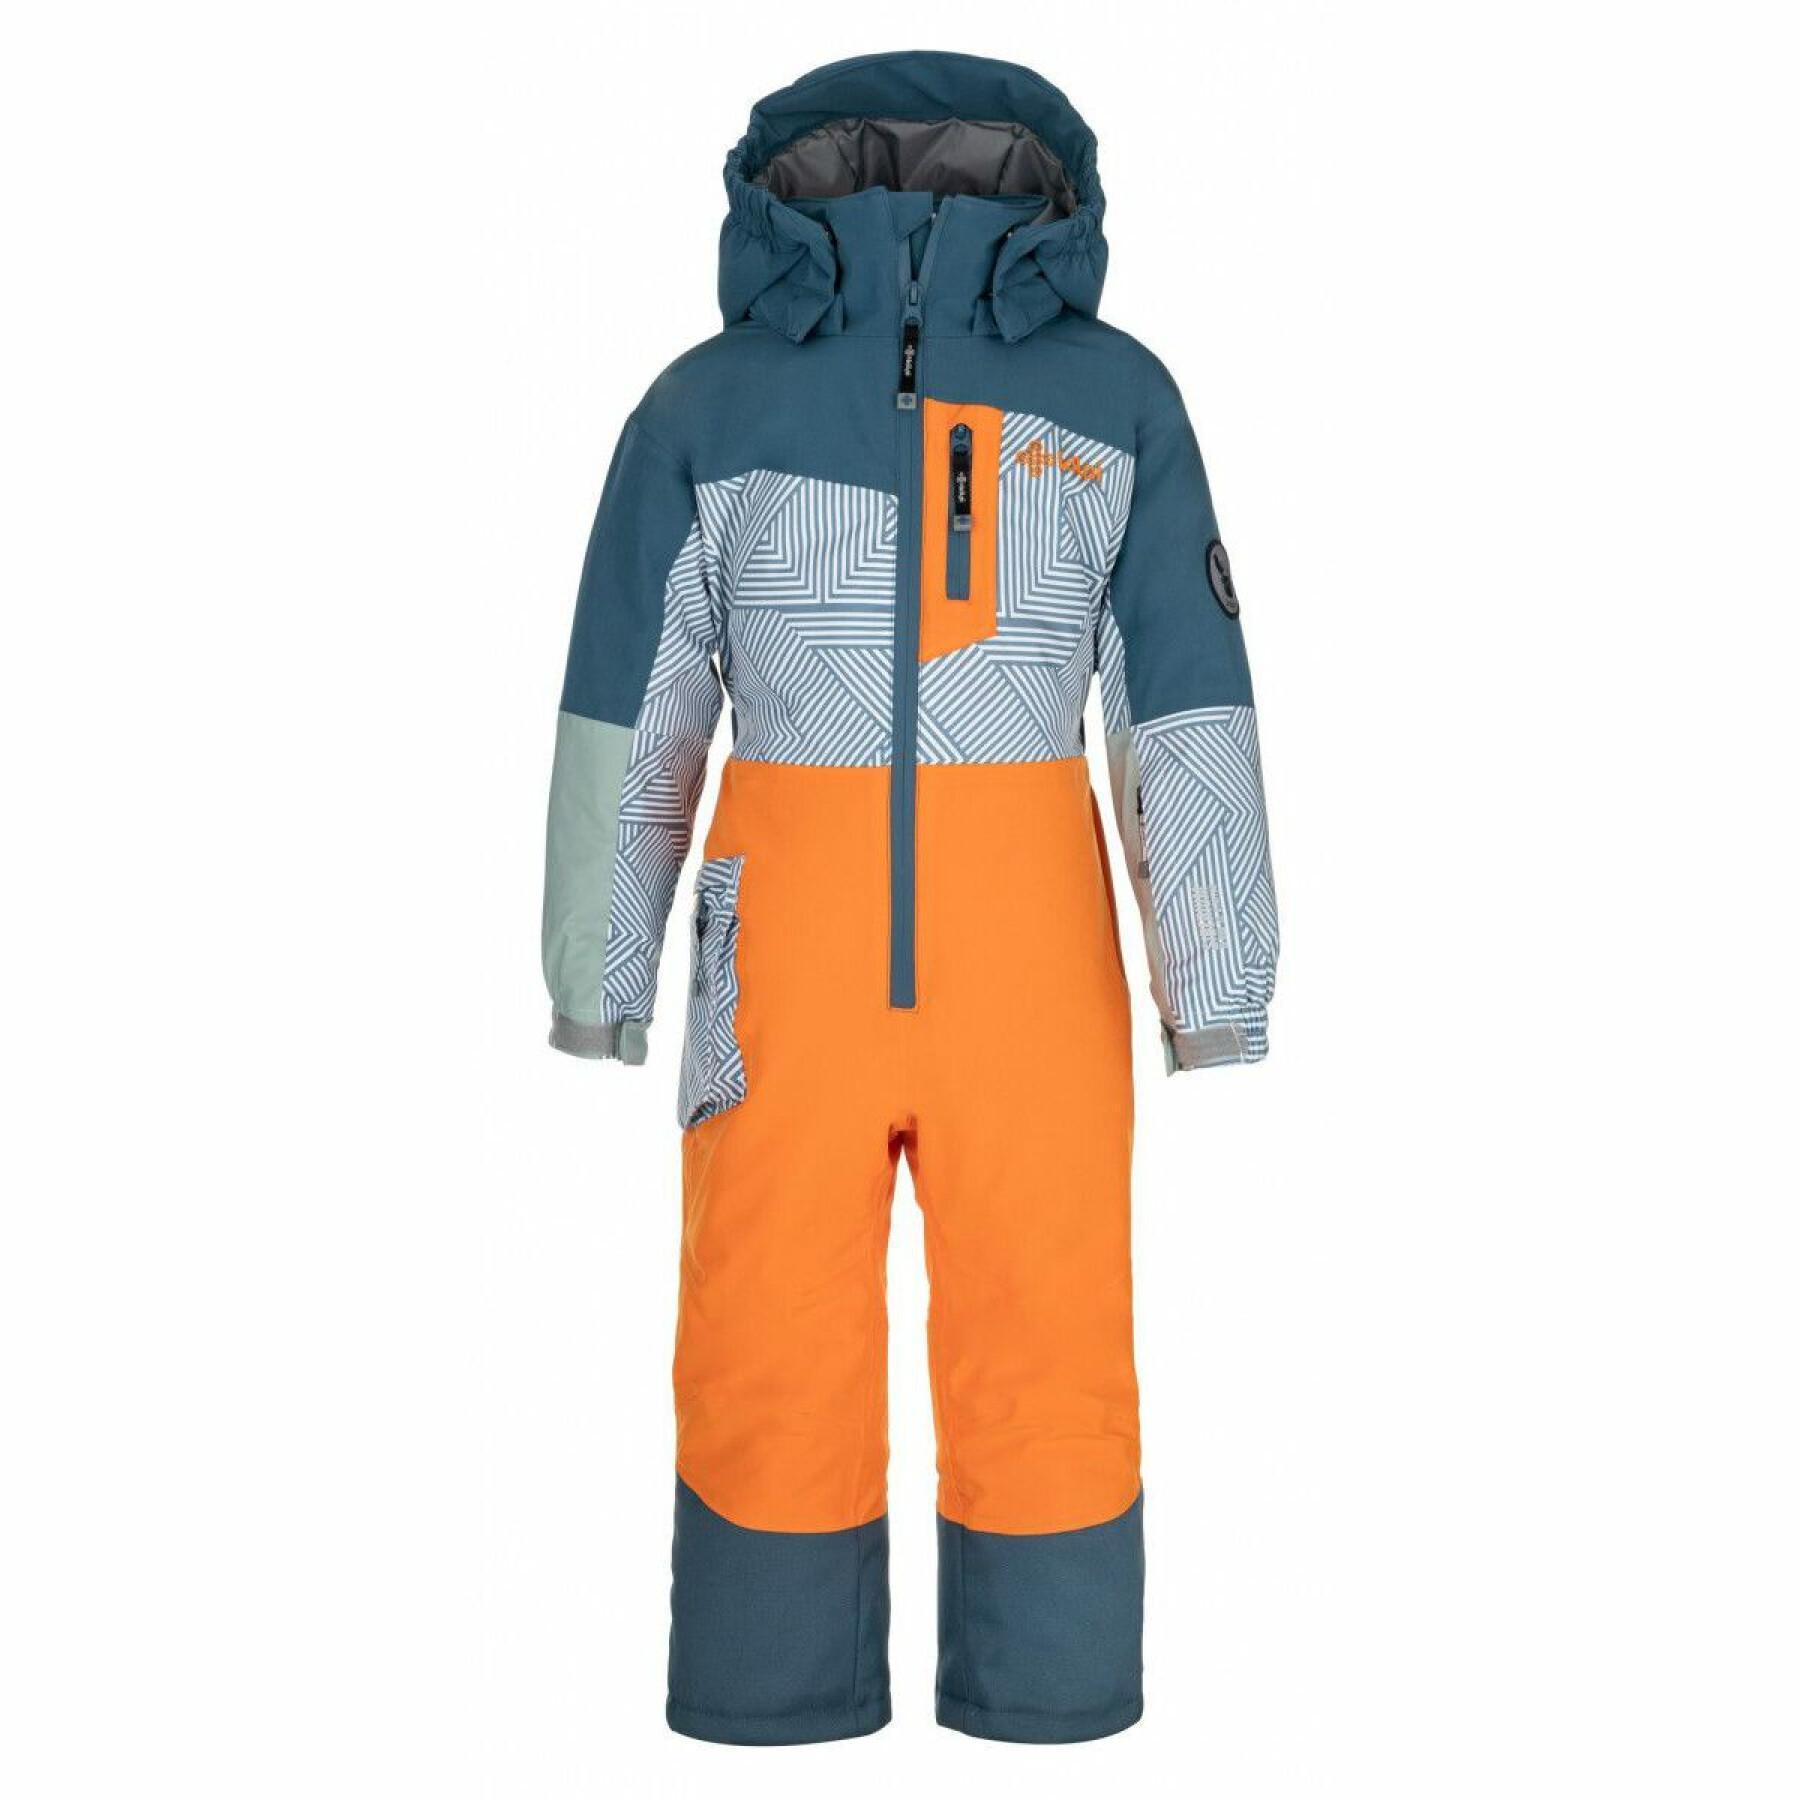 Ski suit for children Kilpi Pontino